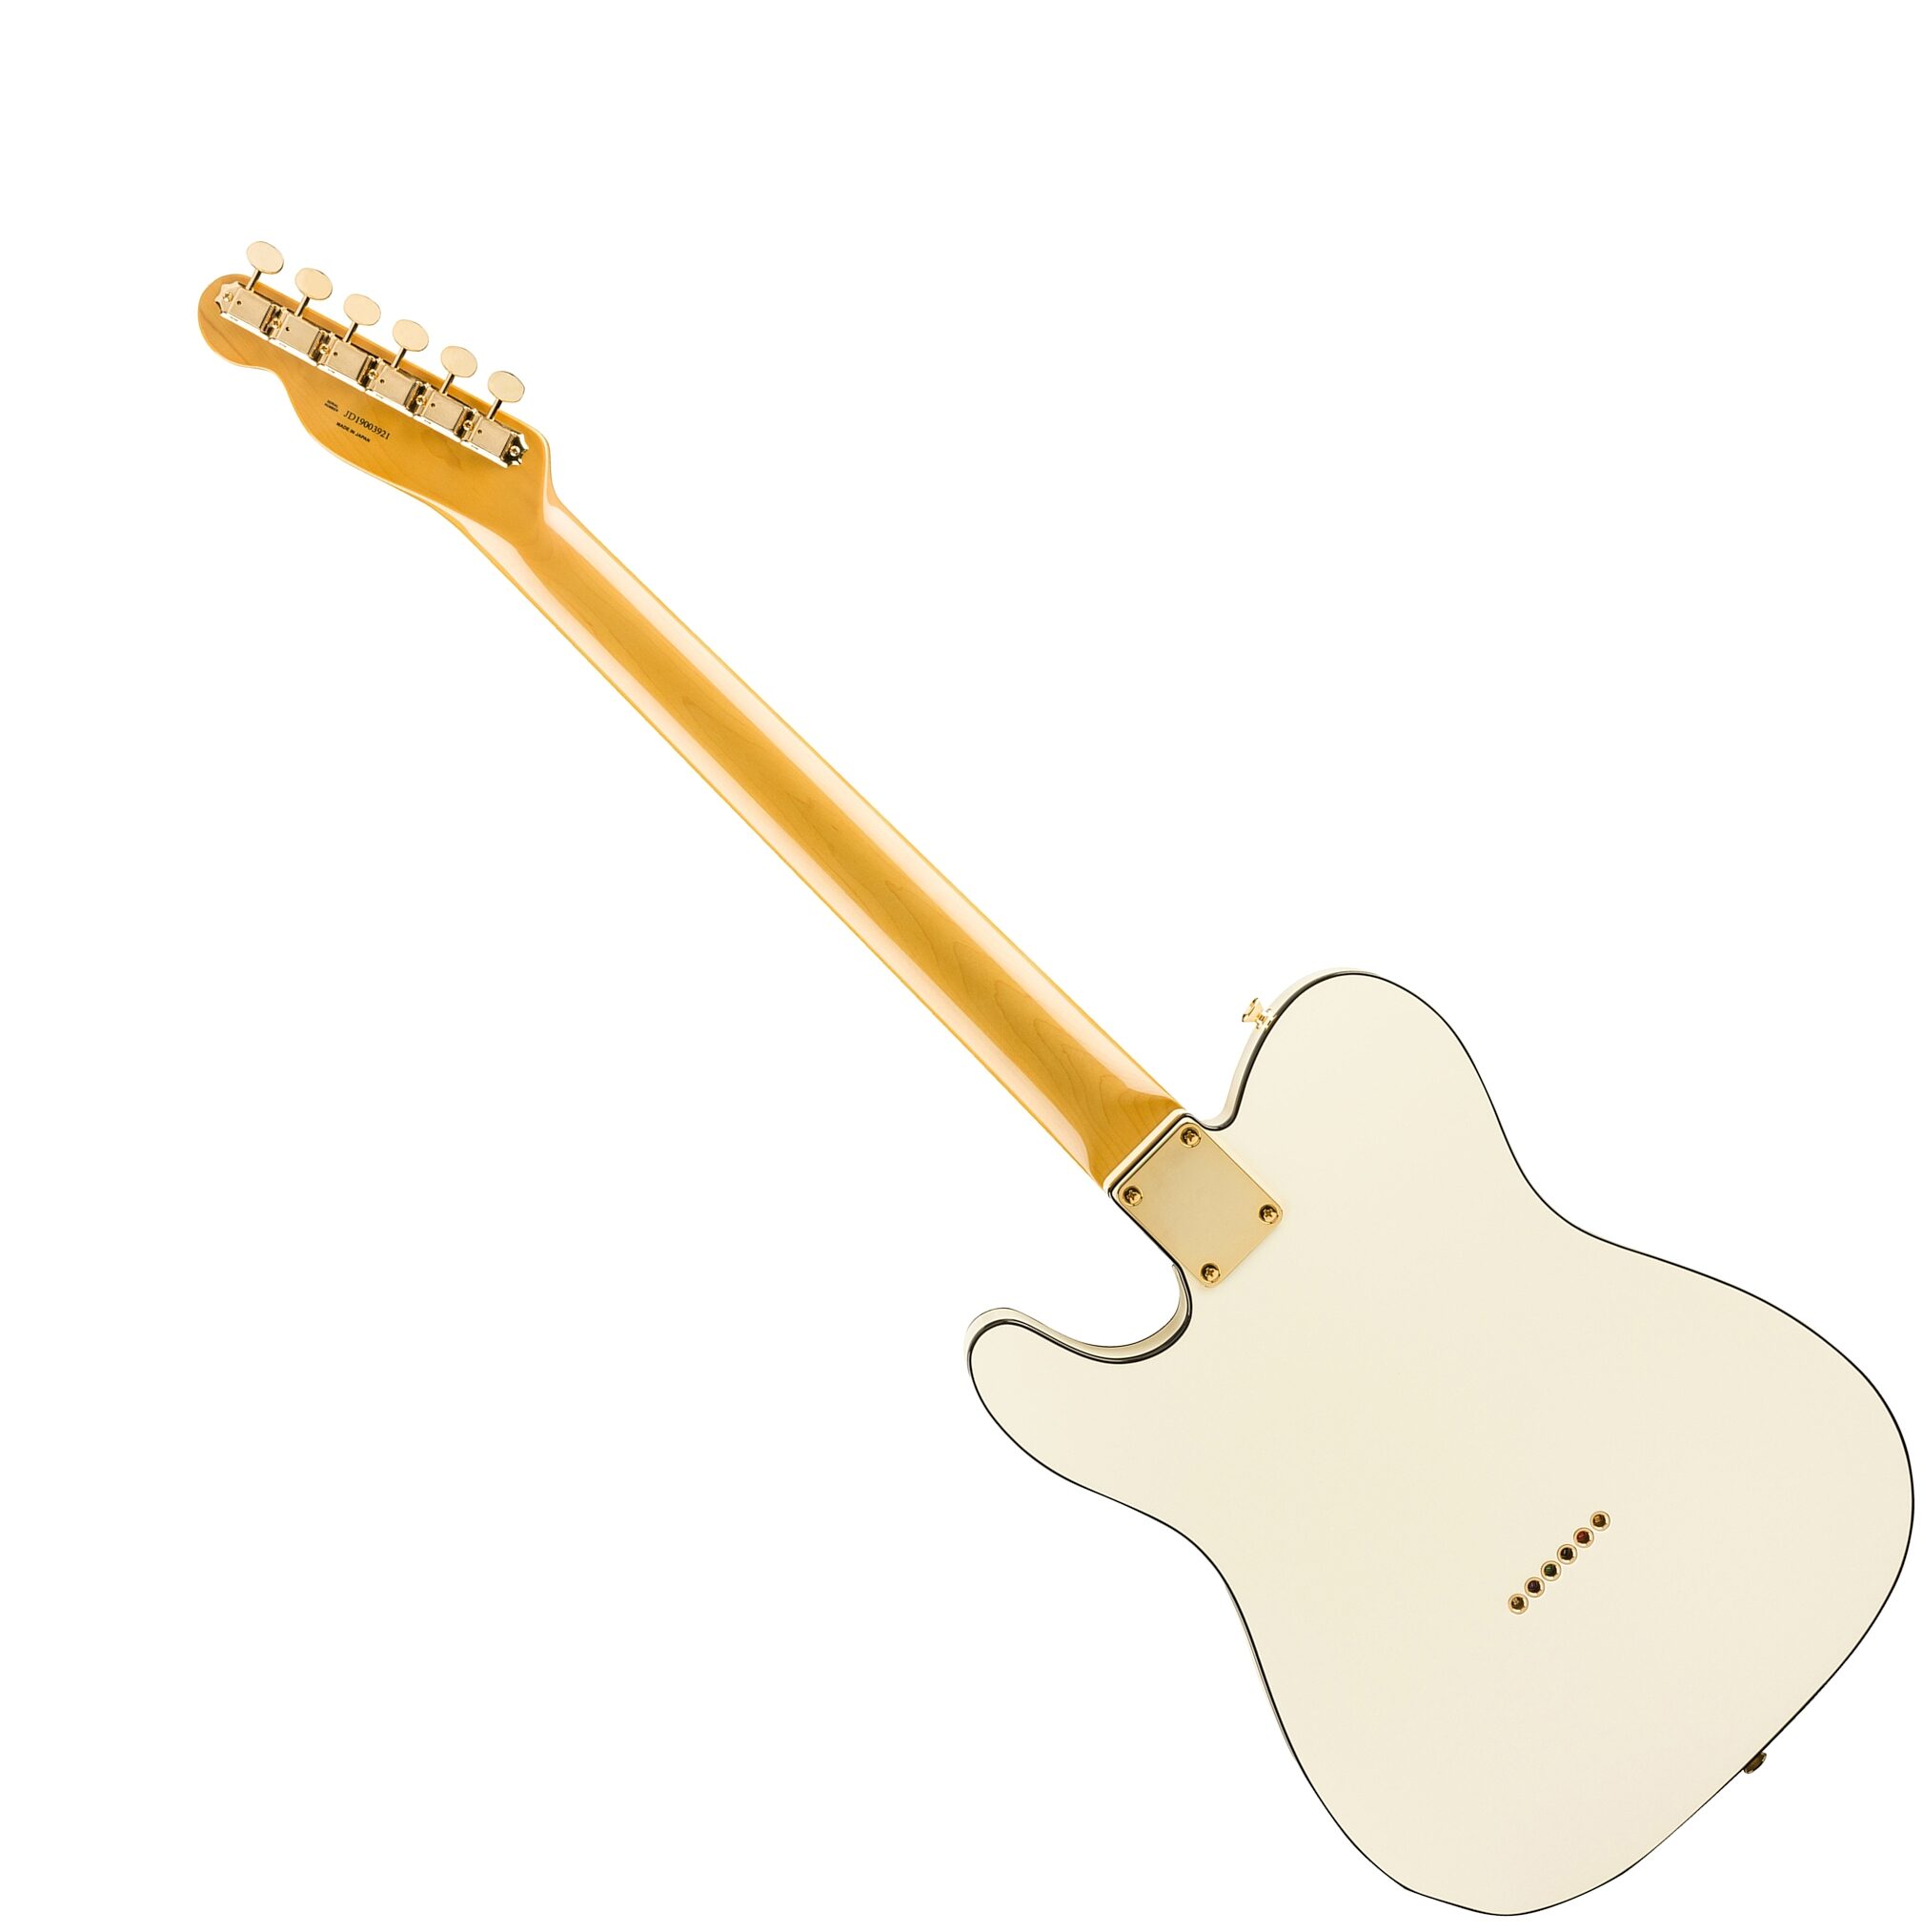 Stratocaster цена. Электрогитара Fender American professional Stratocaster. Fender Stratocaster Olympic White. Fender Stratocaster American Standard Olympic White. Фендер стратокастер Ингви Мальмстин.